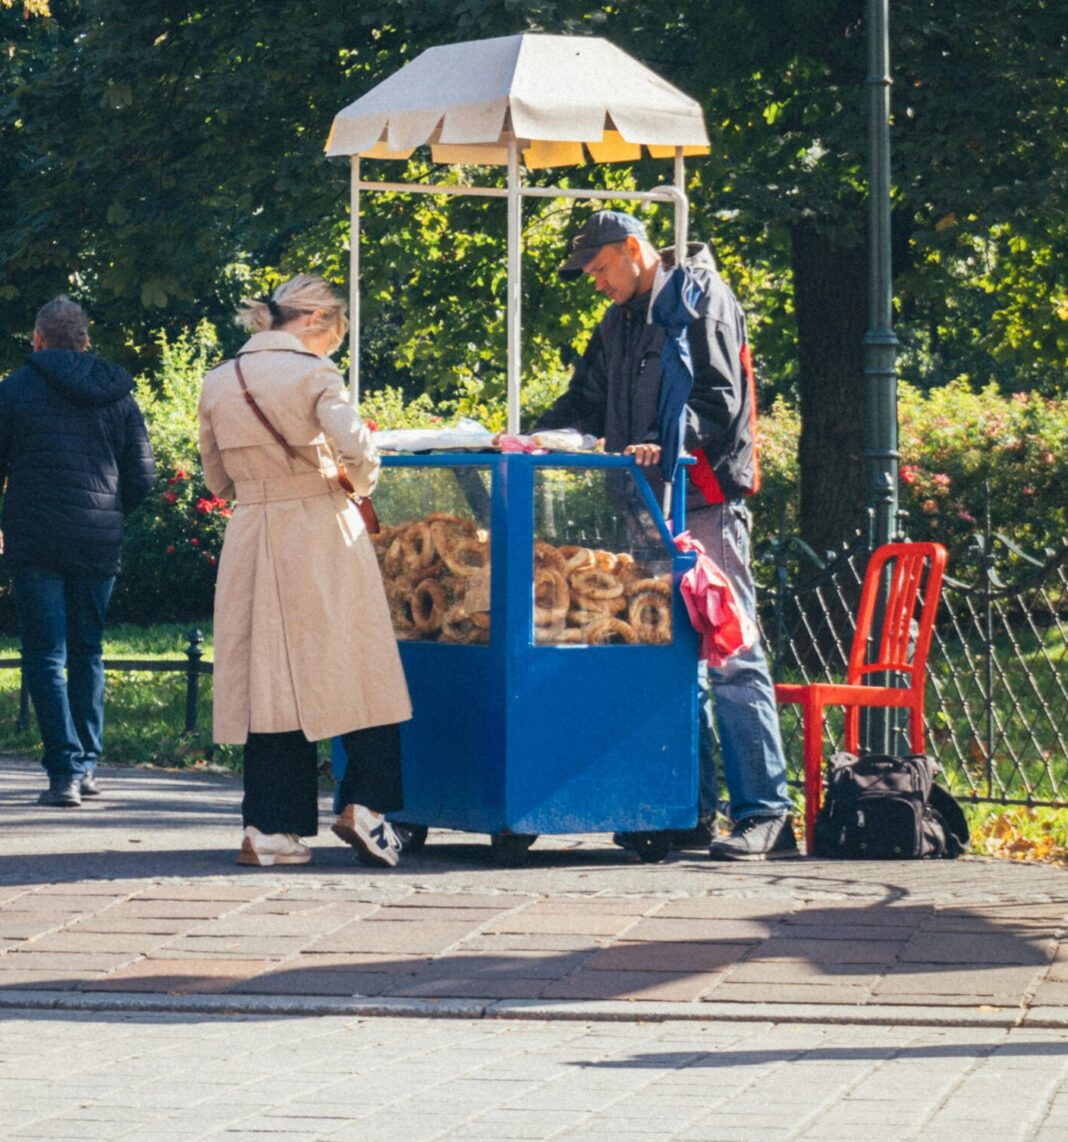 Street Bagel Seller in the Park